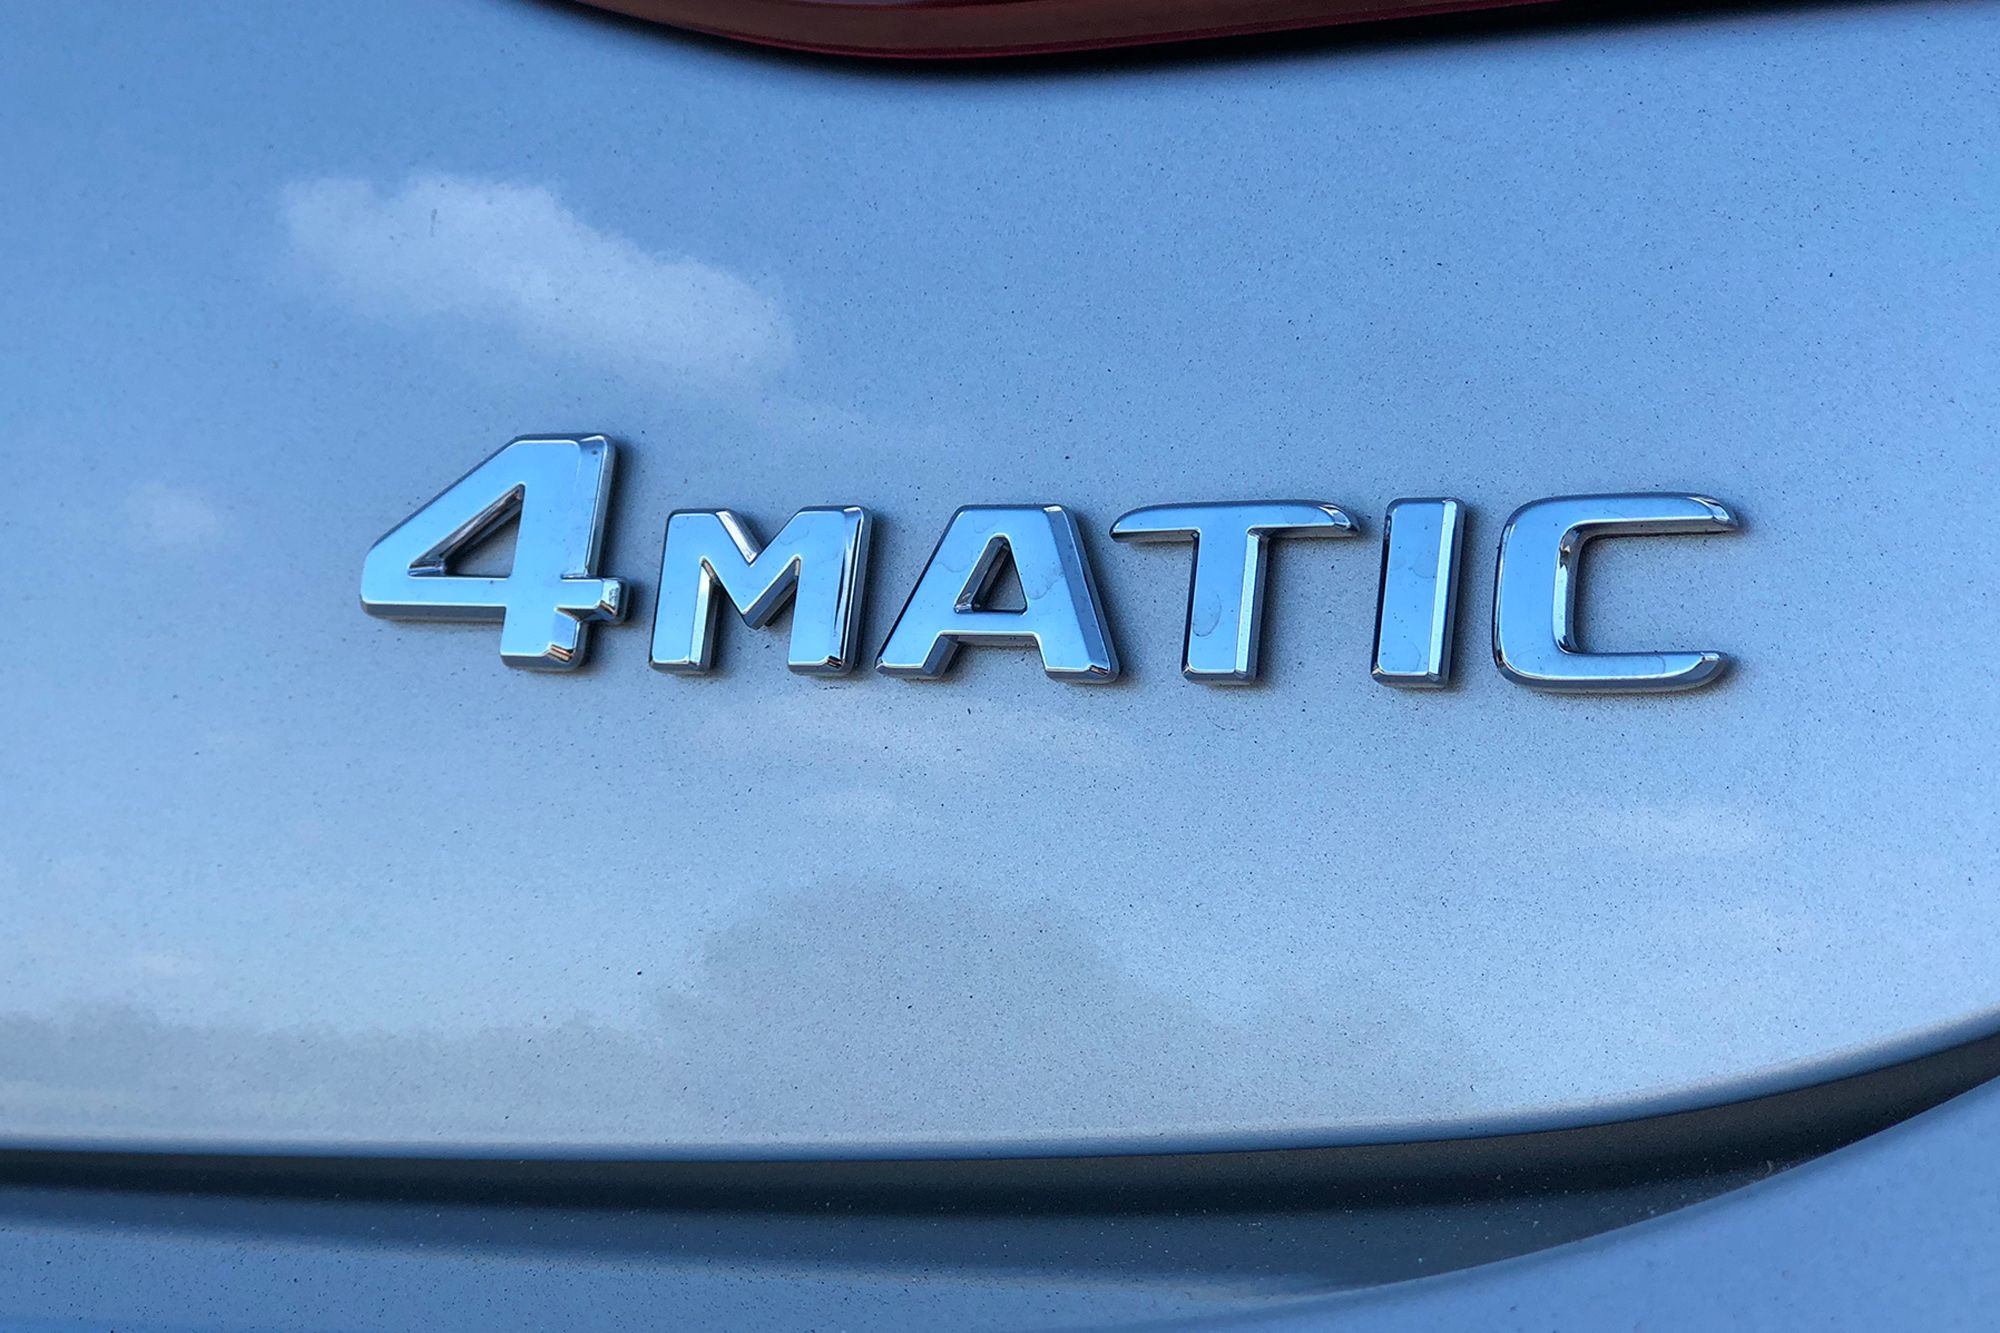 4Matic AWD